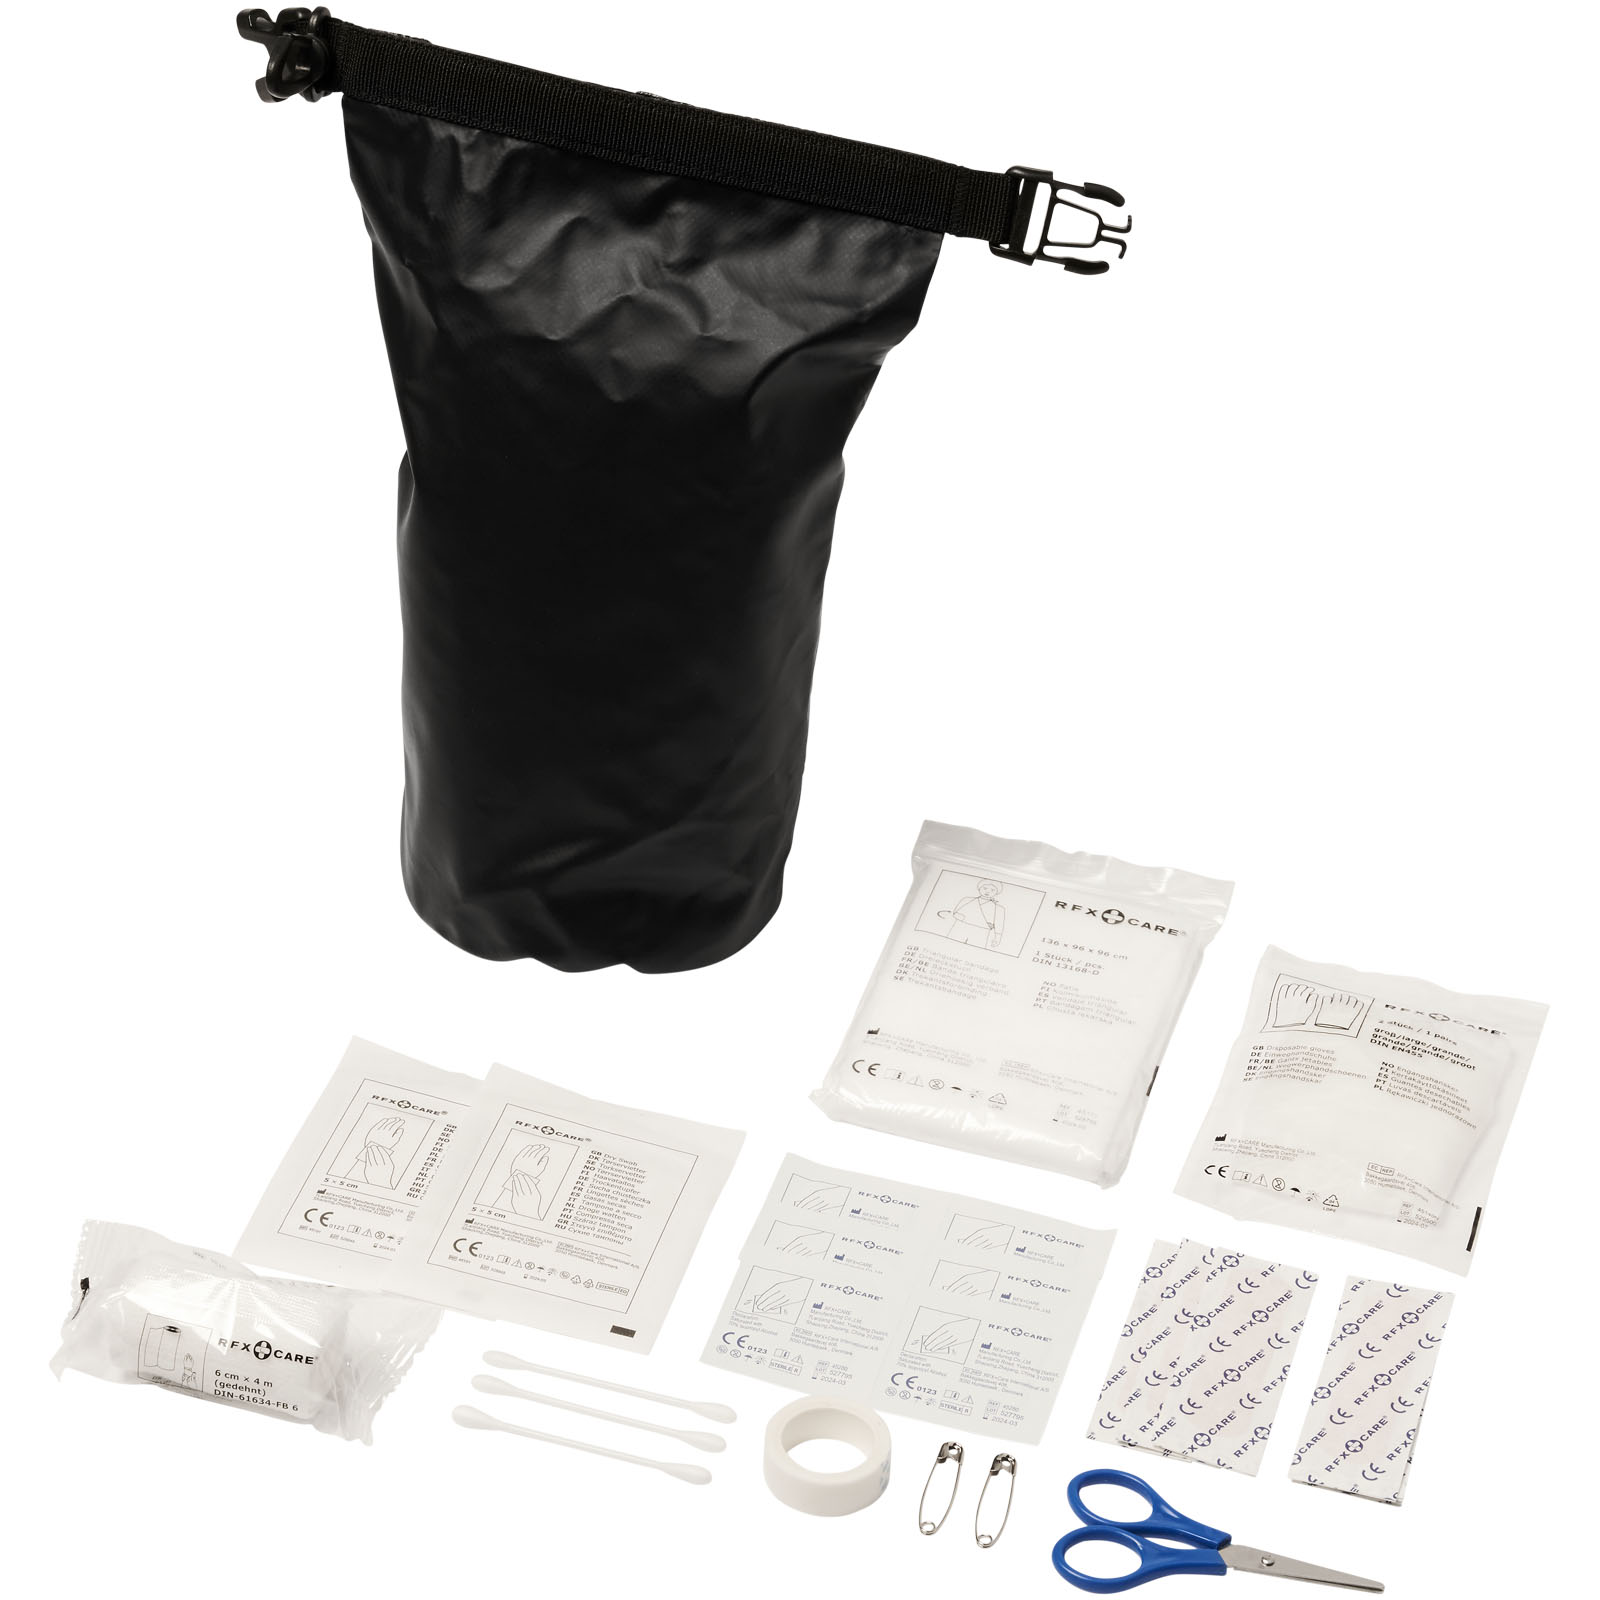 First Aid Kits - Alexander 30-piece first aid waterproof bag